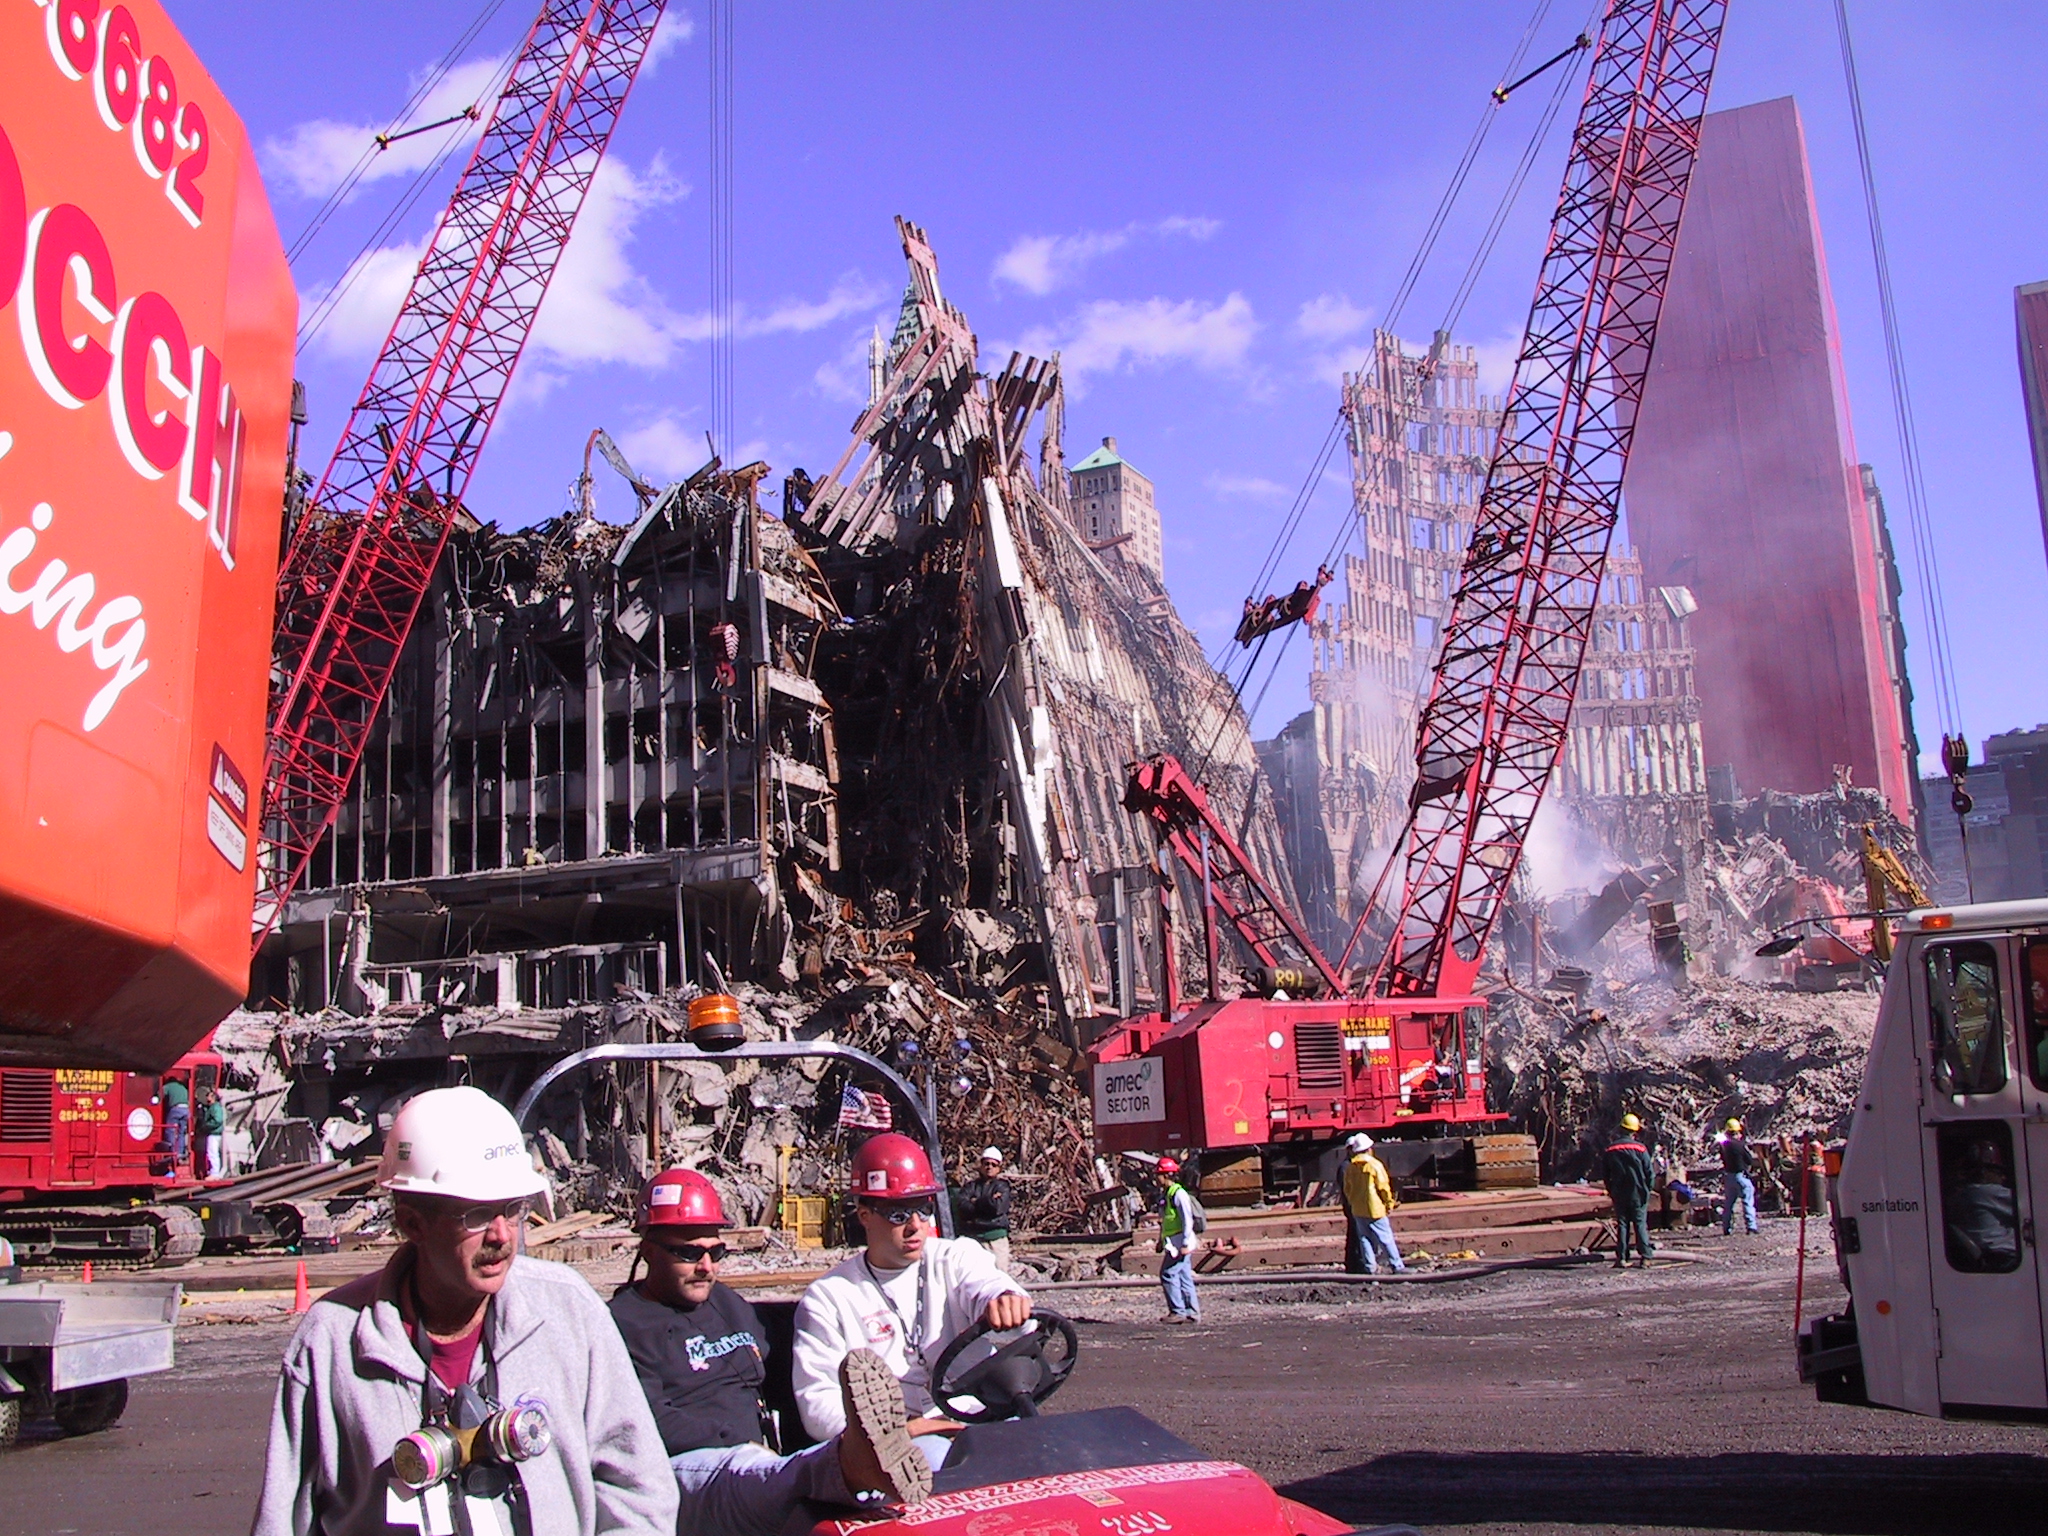 Фото 11 сентября в сша фото